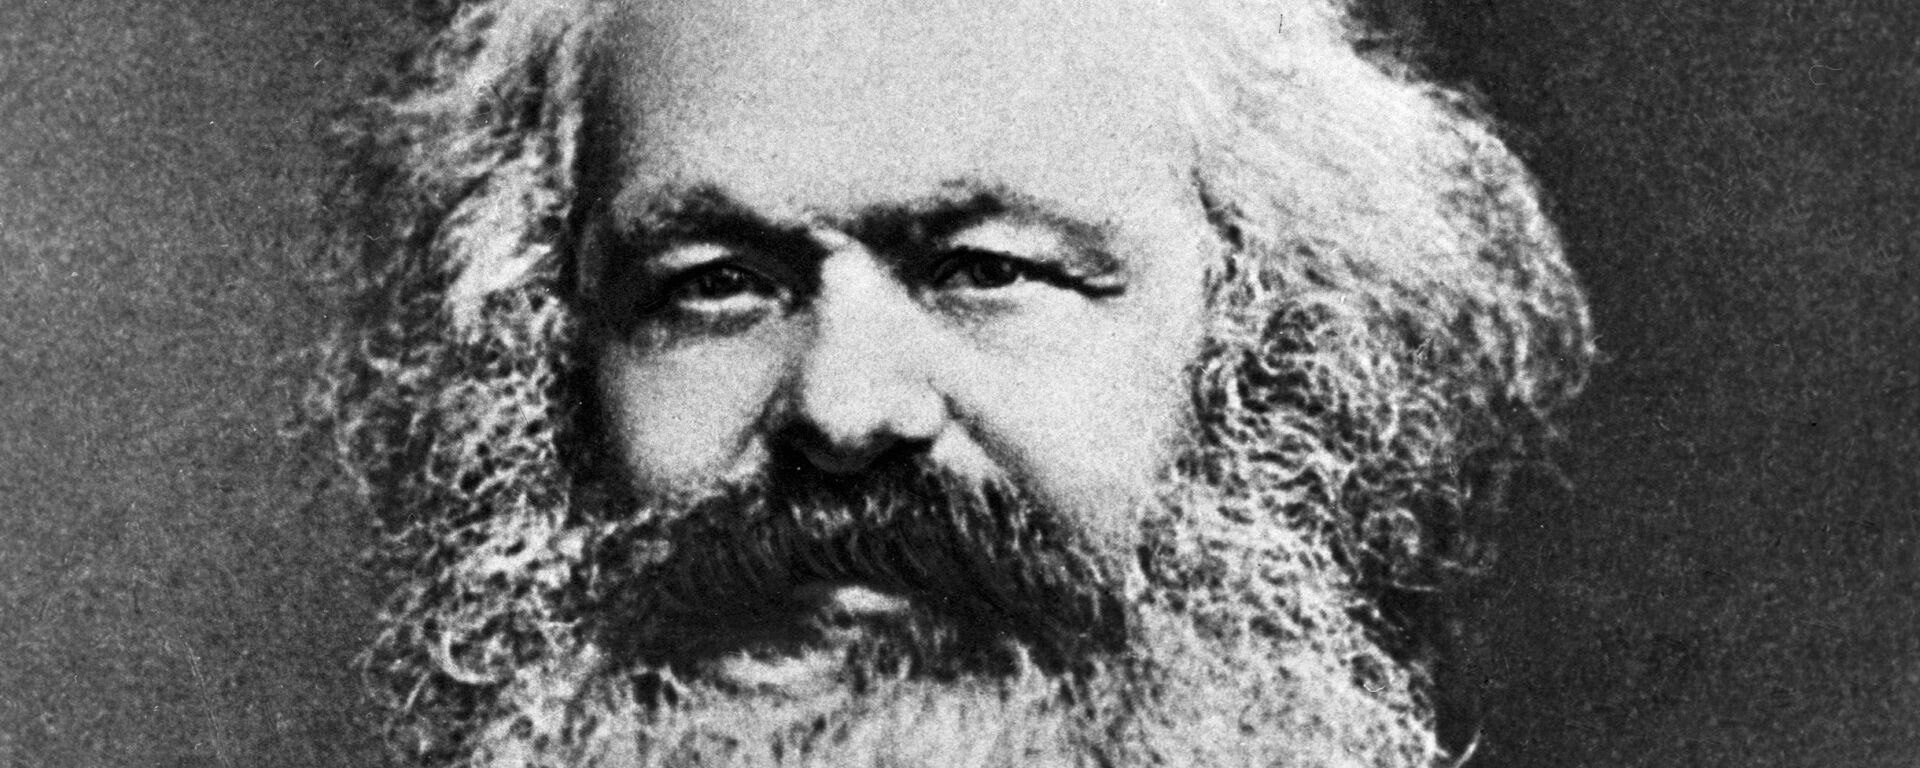 Karl Marx - Sputnik Mundo, 1920, 05.05.2018